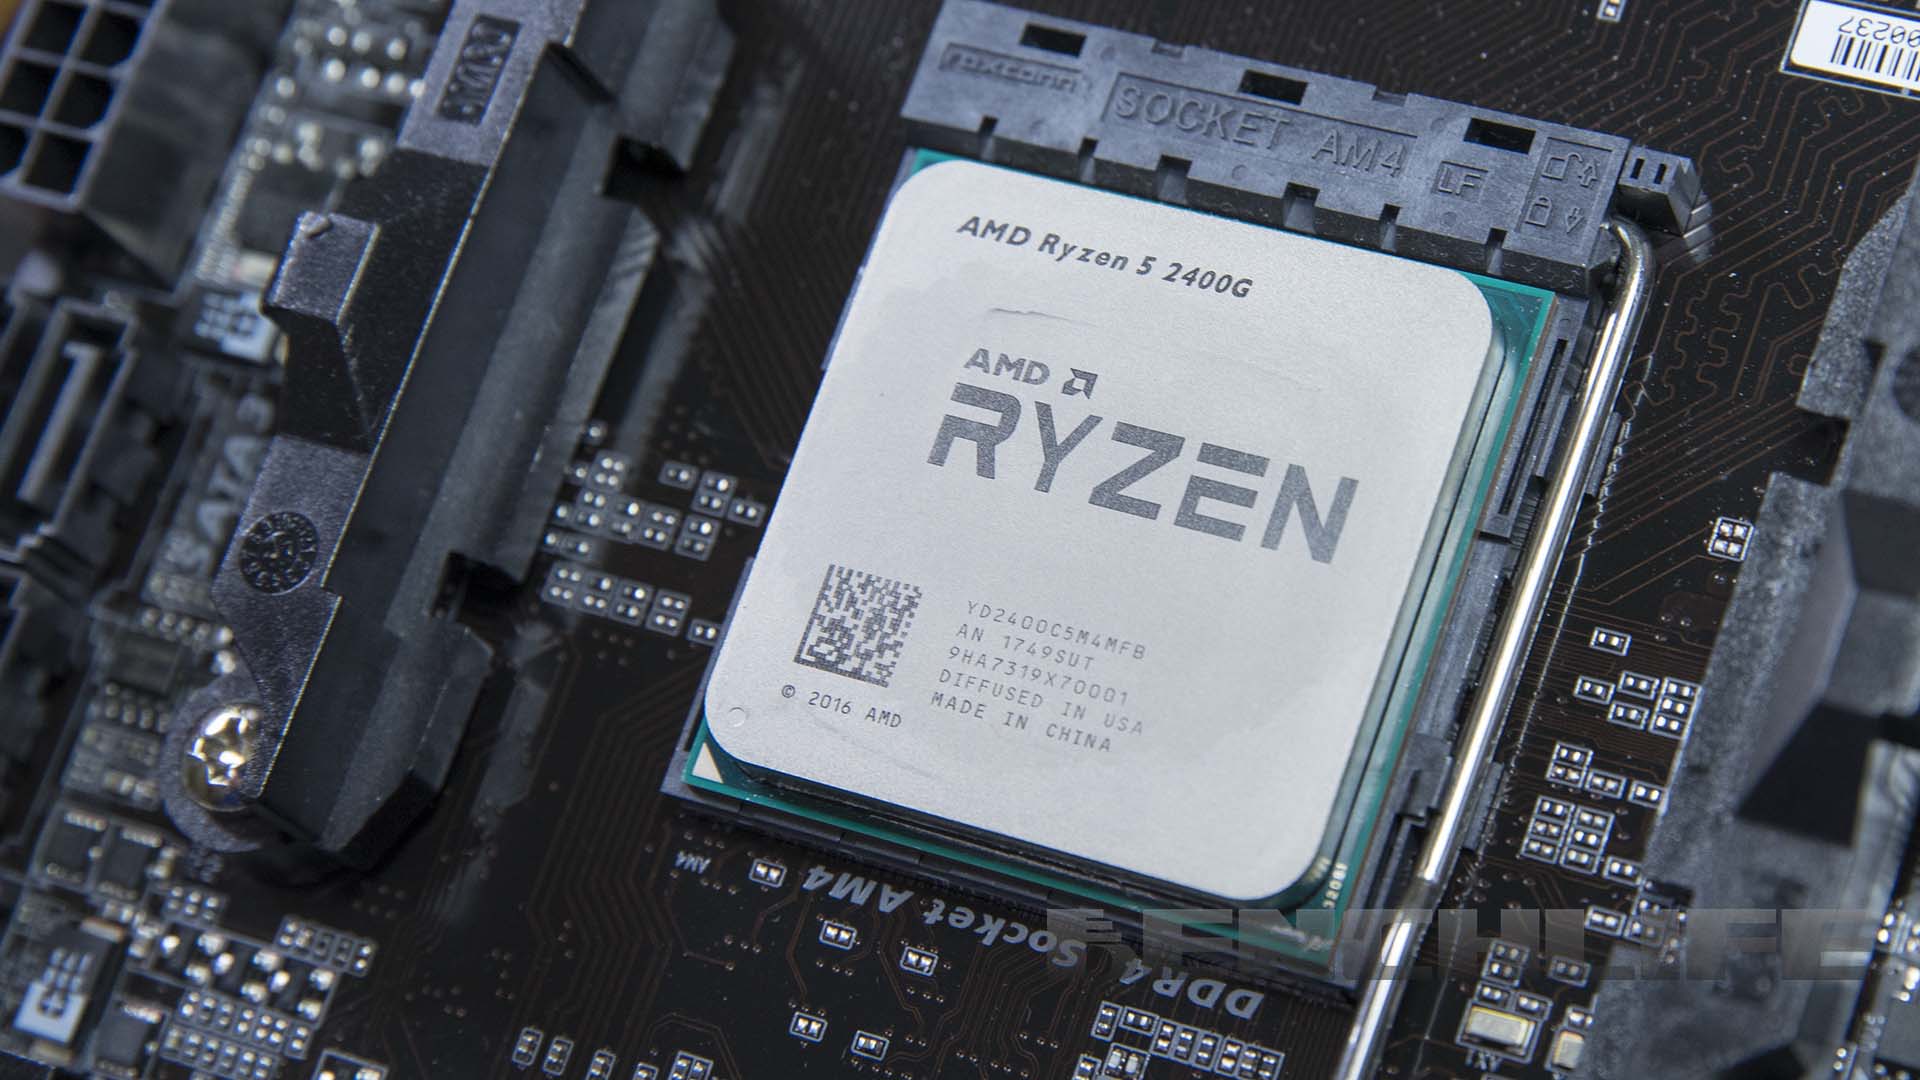 Amd ryzen 5 5500gt. AMD Ryzen 5 2400g. AMD Ryzen 5 Pro 2400g. AMD Risen 5 2400g. Yzen 2200g.